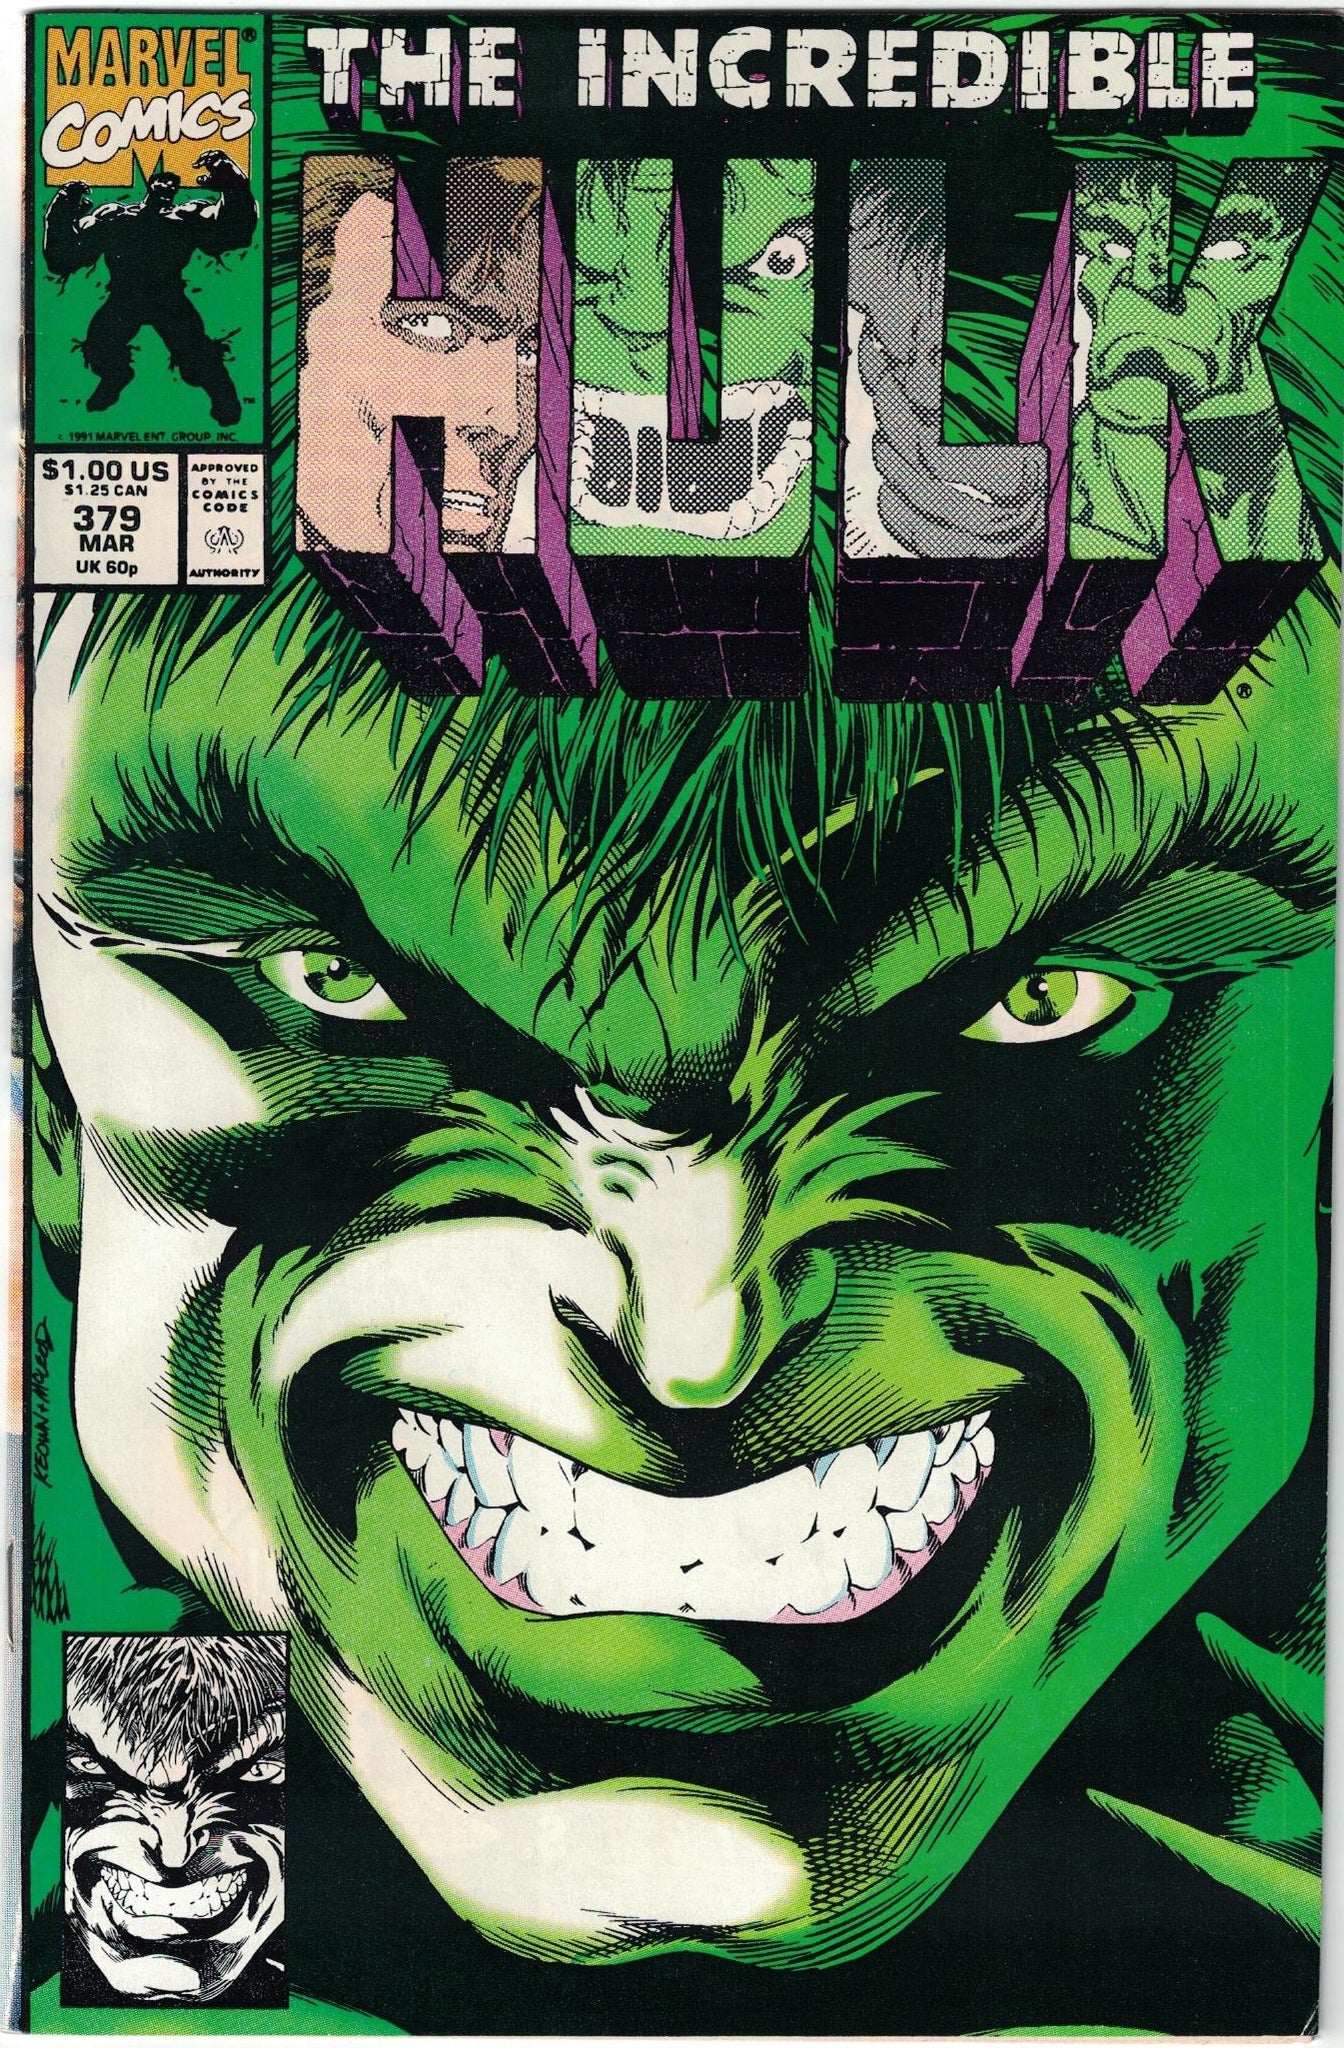 The Incredible Hulk Vol.1 379 [1991] Collection Corner